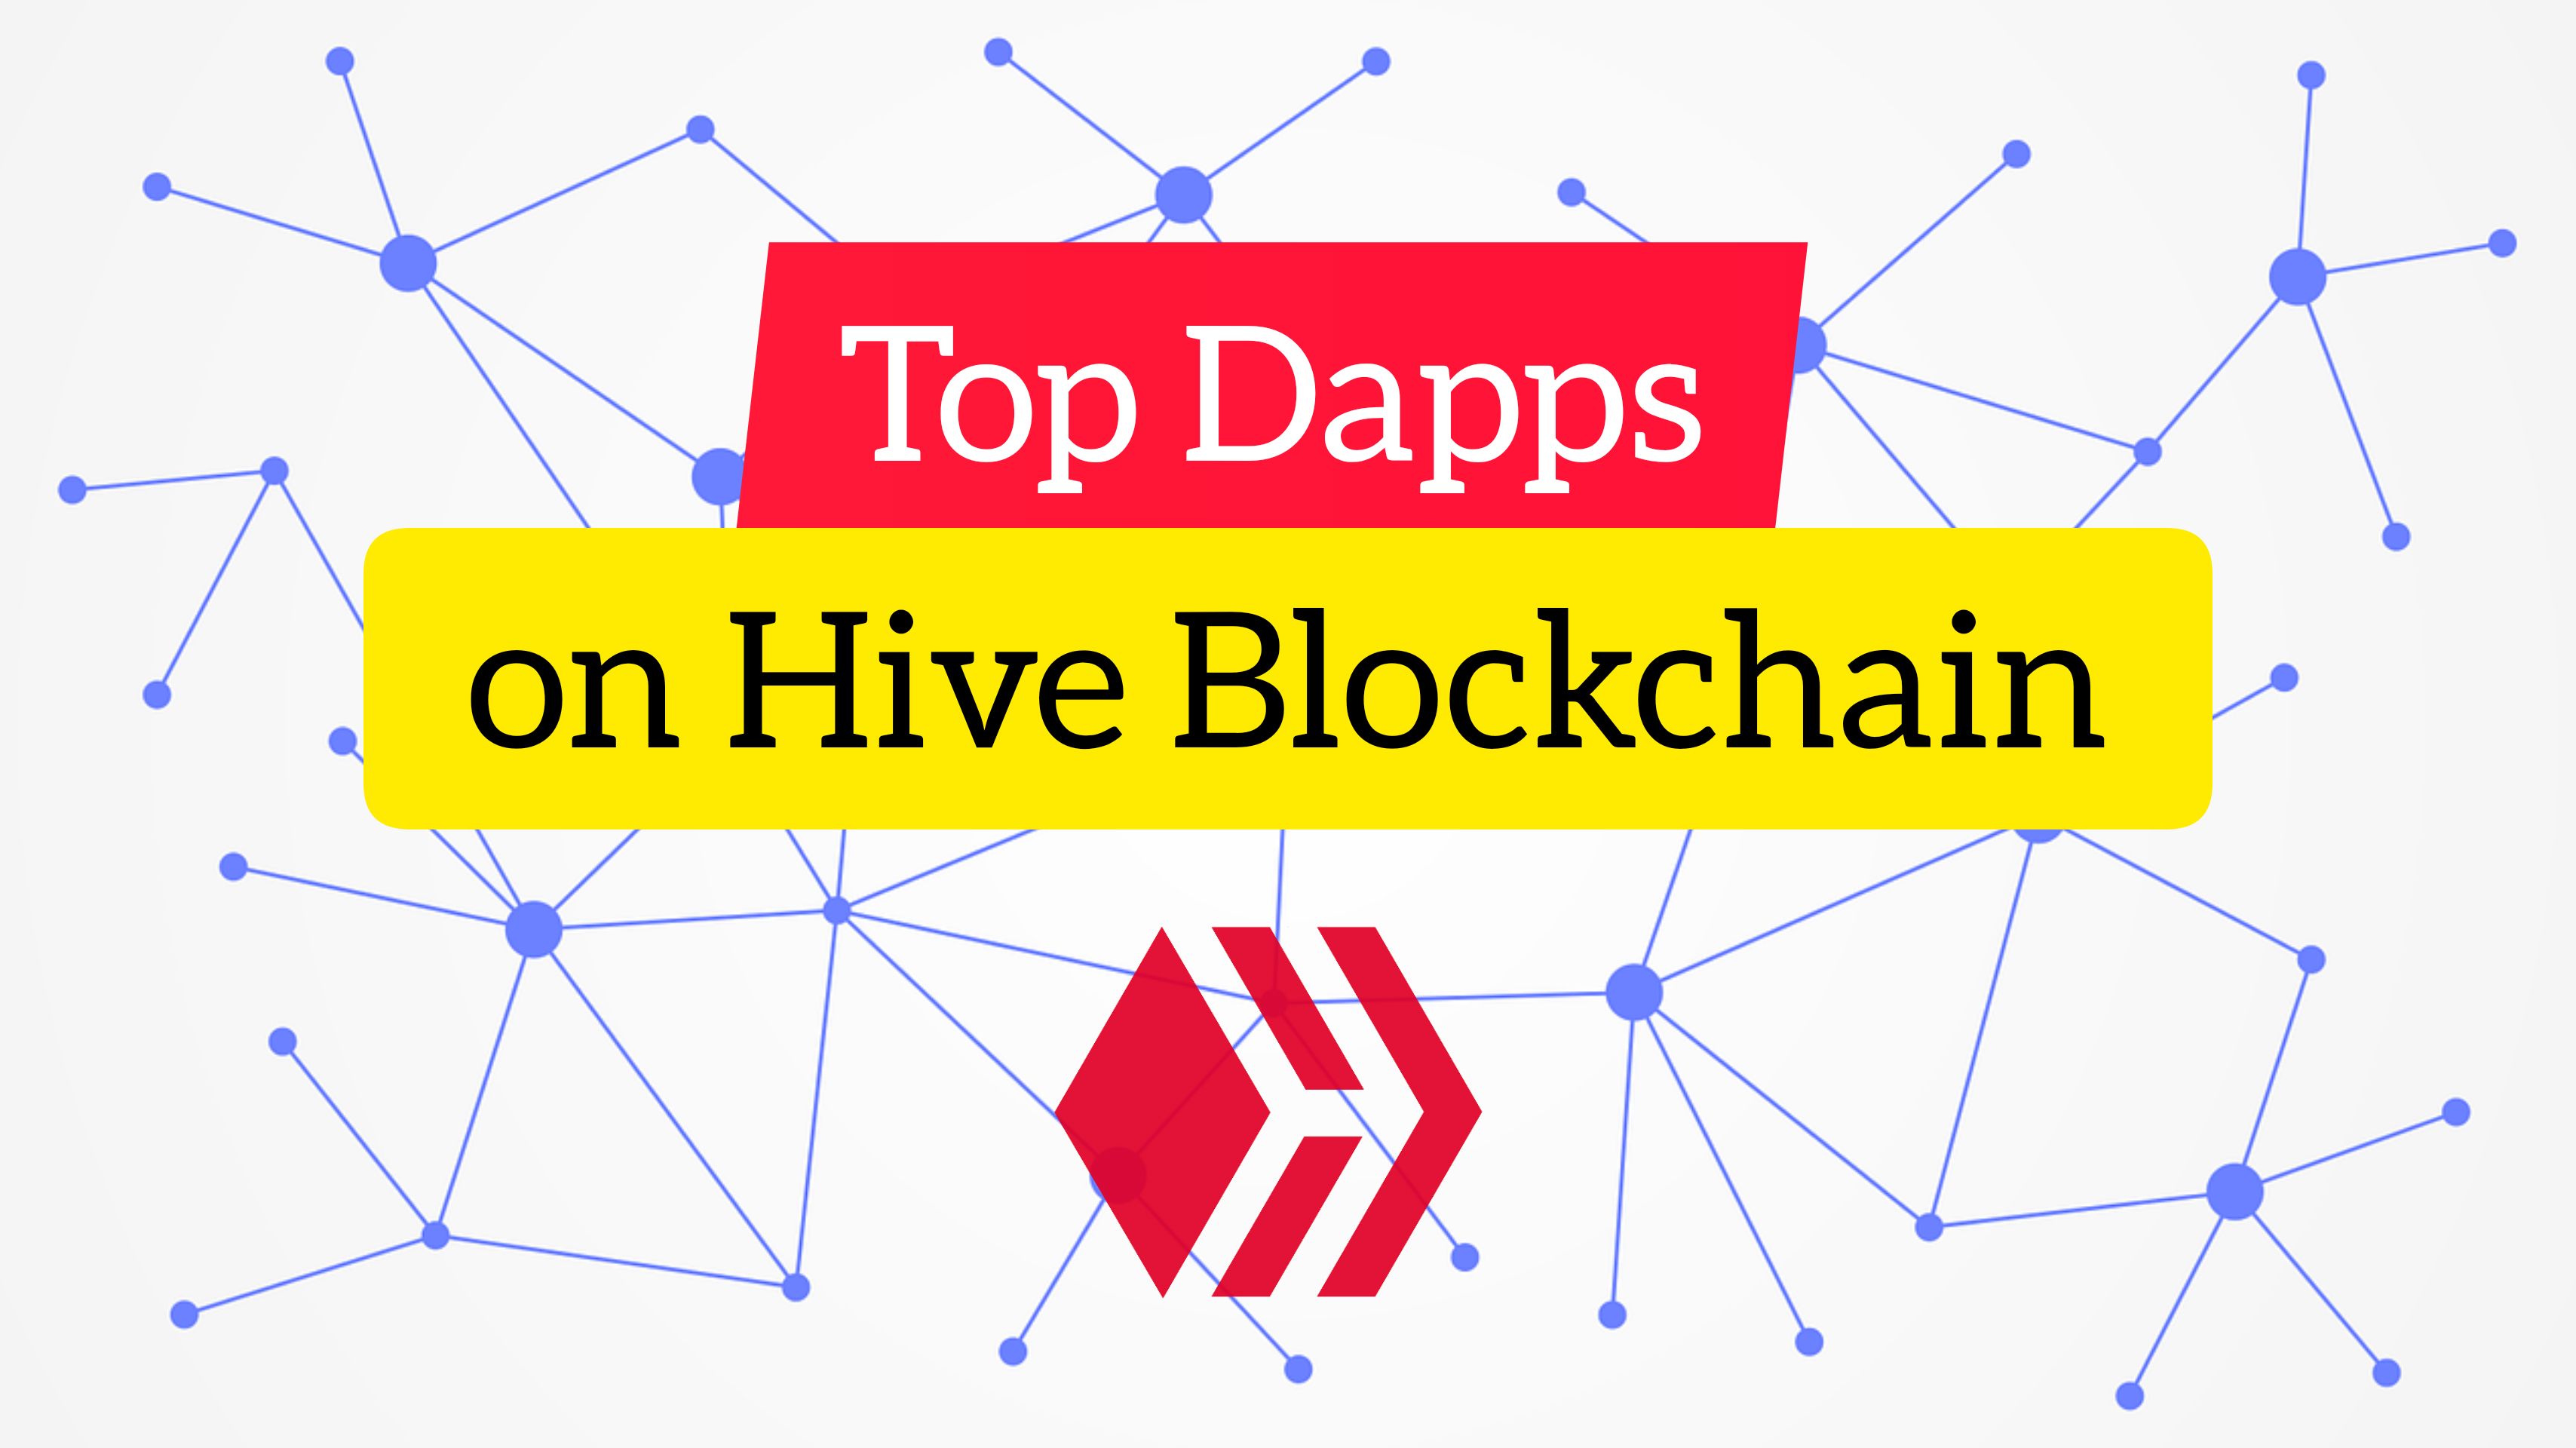 Top Dapps on Hive Blockchain